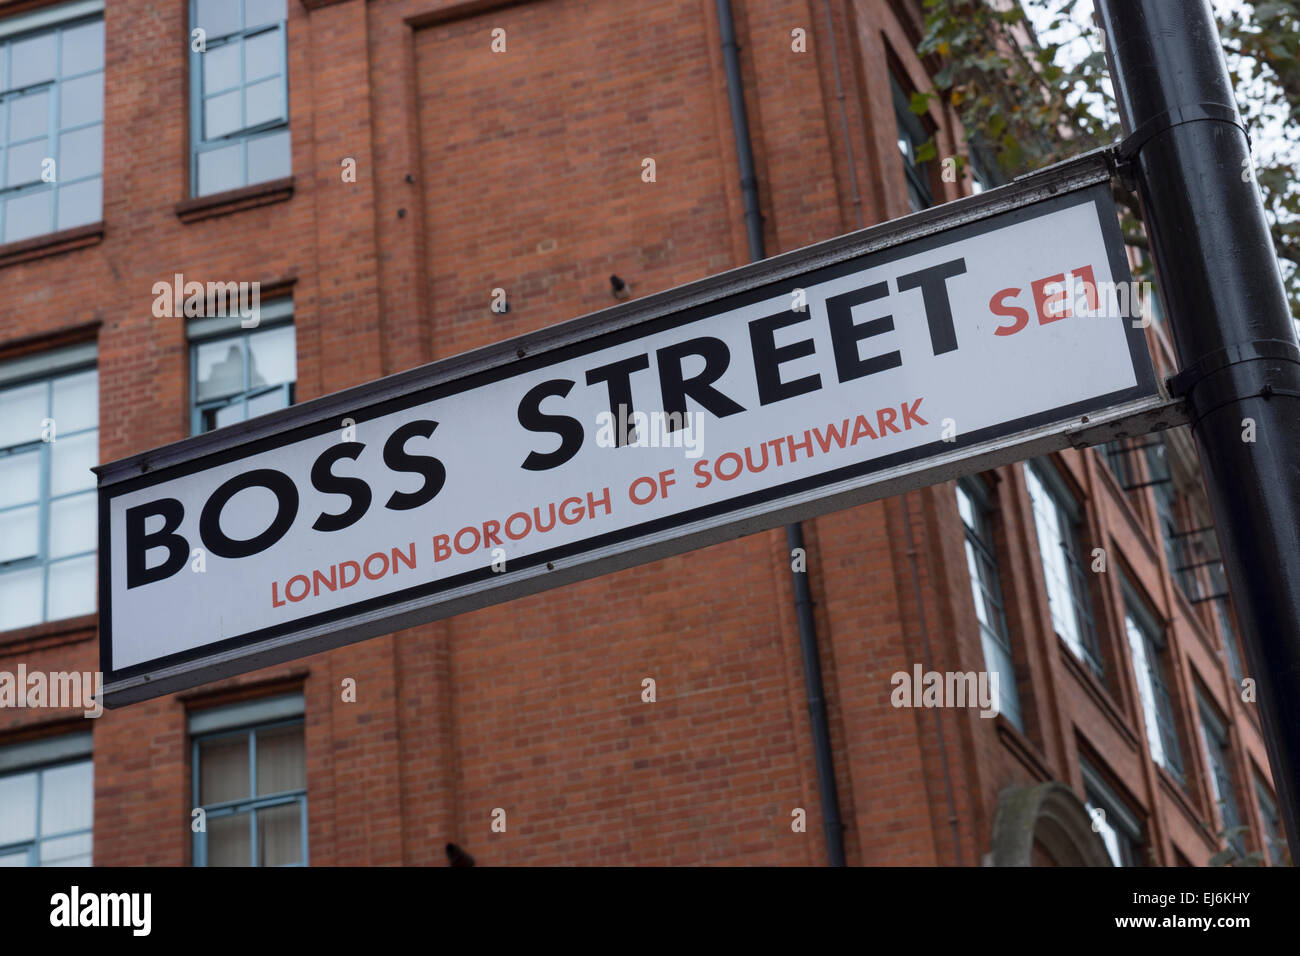 Boss Street SE1 Cartello stradale Londra Centrale Foto Stock